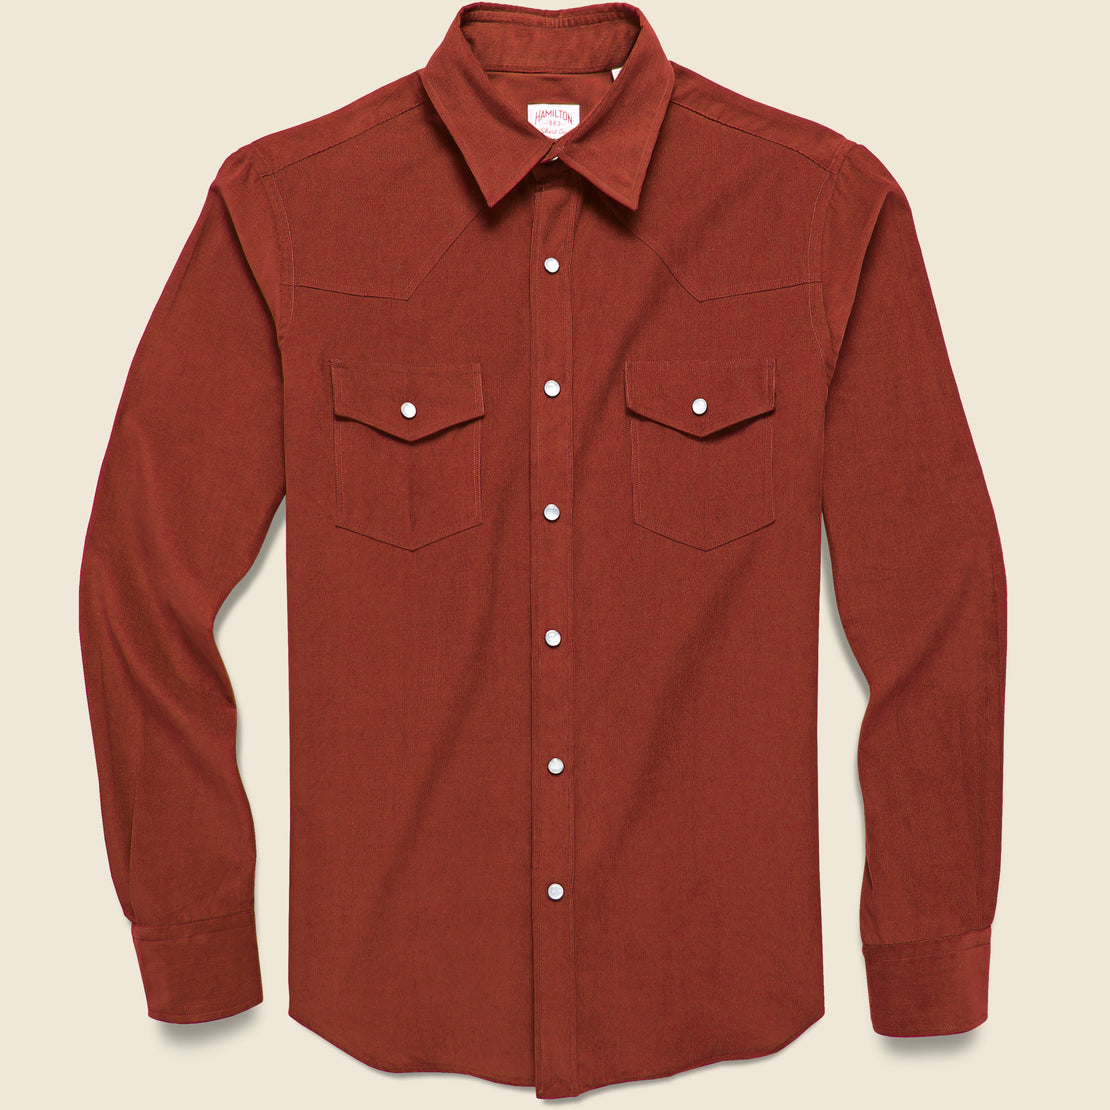 Hamilton Shirt Co. Micro Corduroy Western Shirt - Rust